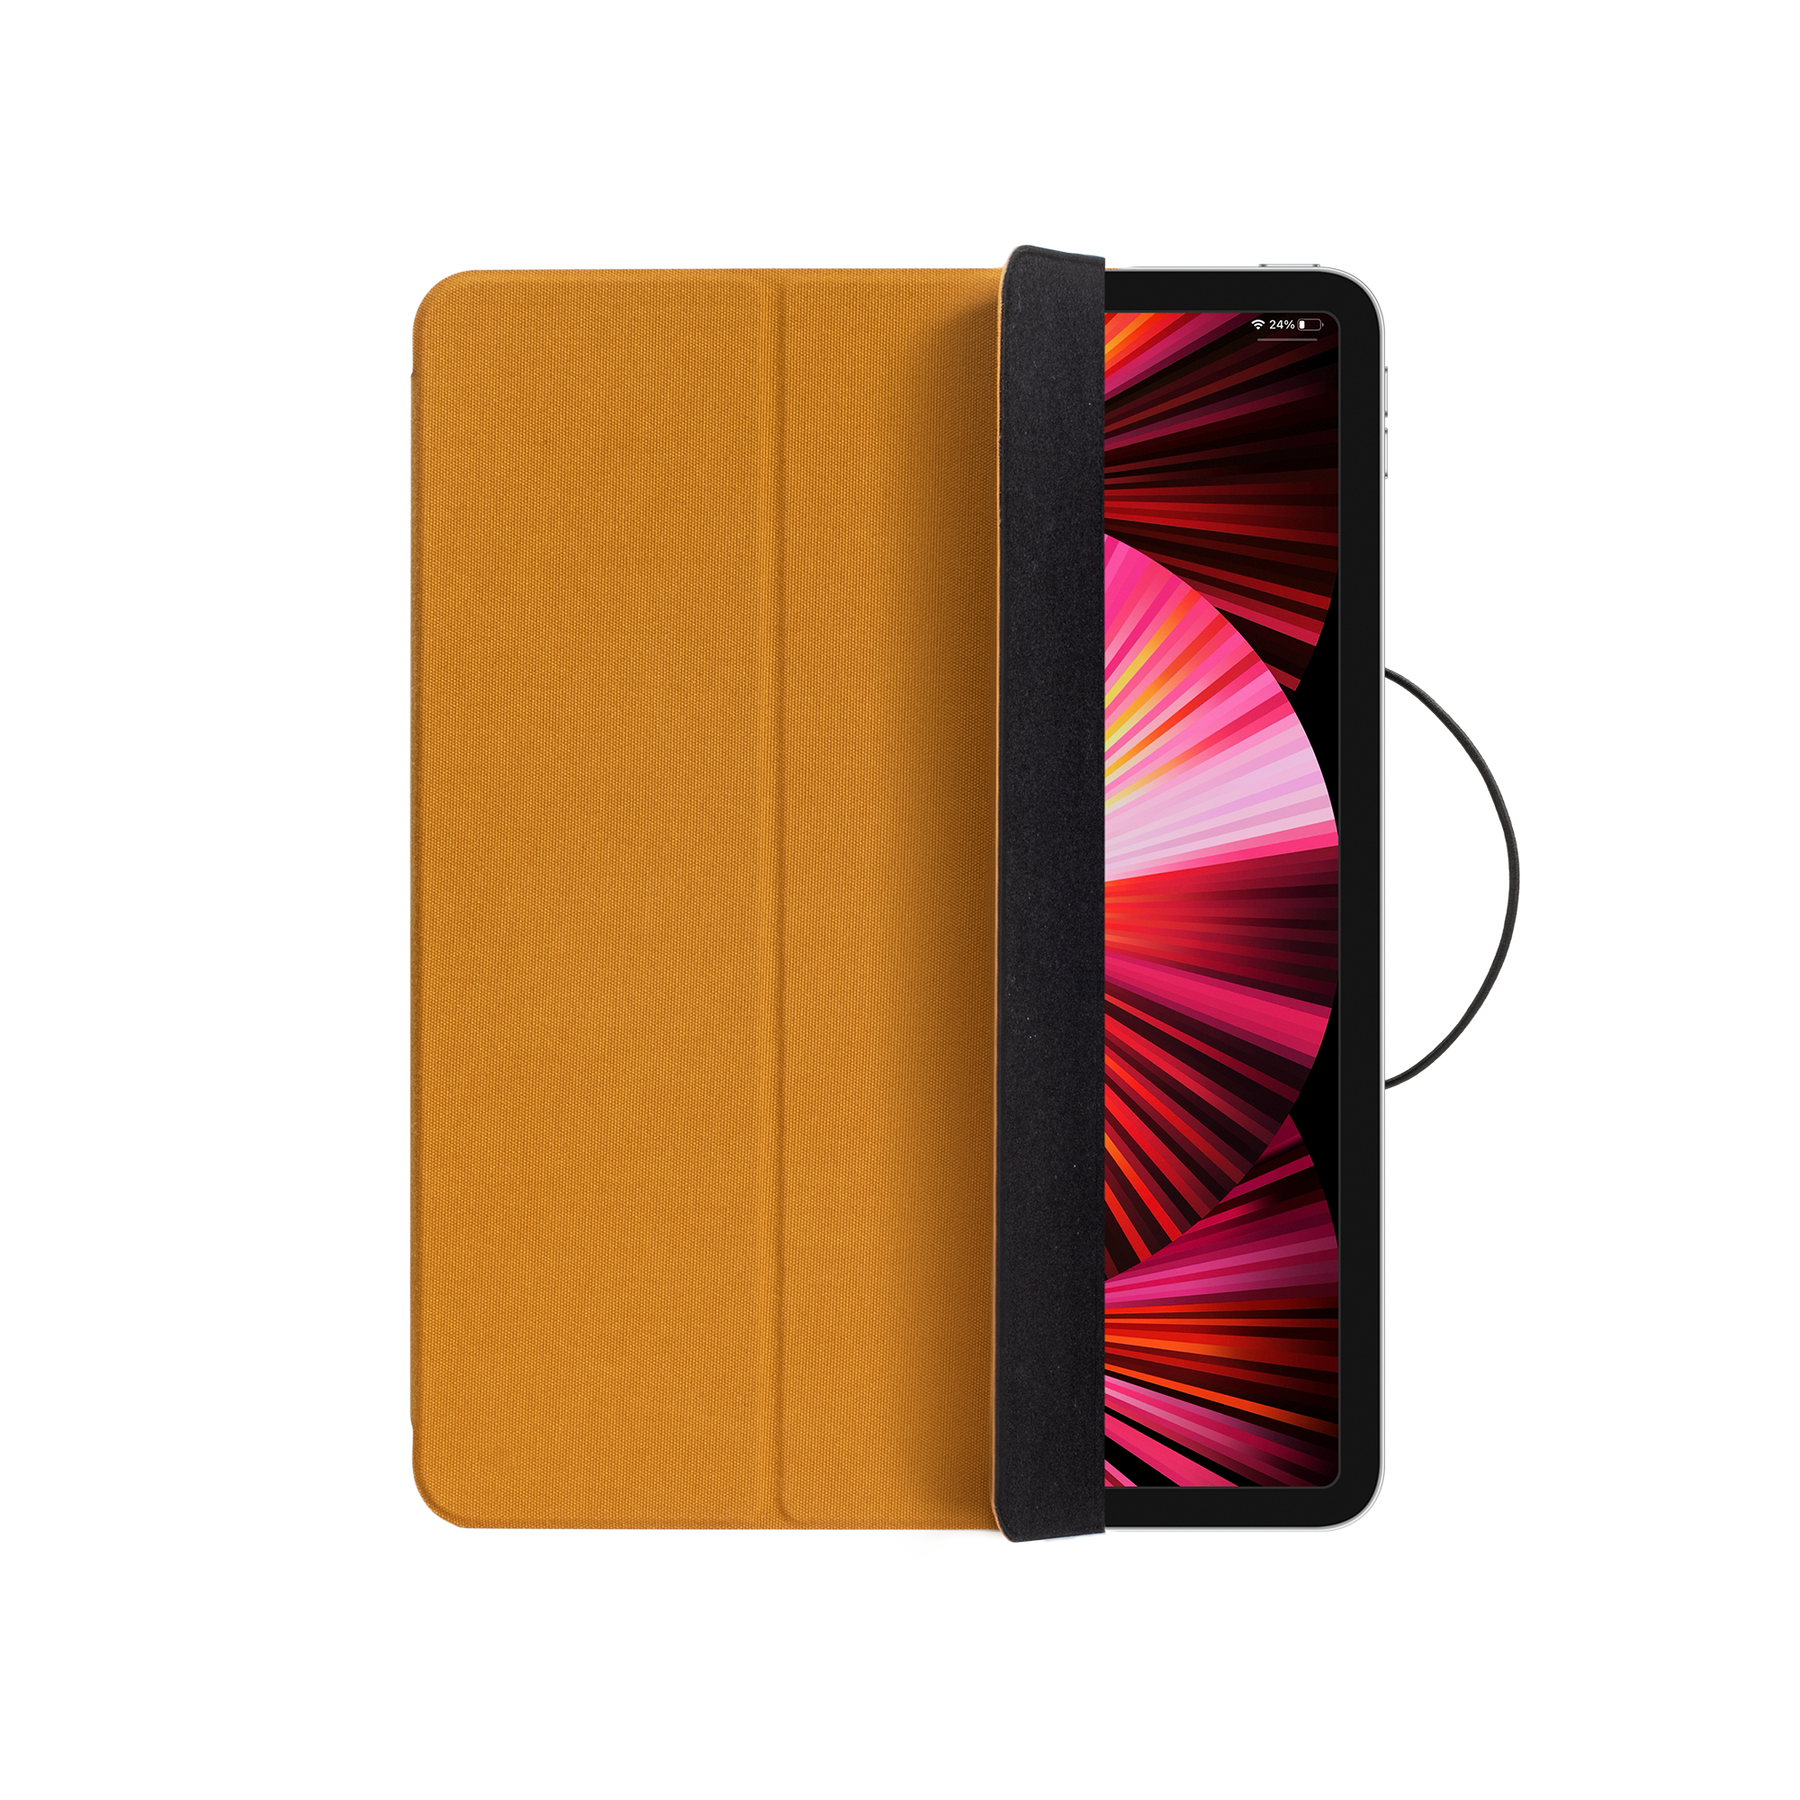 W.F.A Folio for iPad Pro (11”)